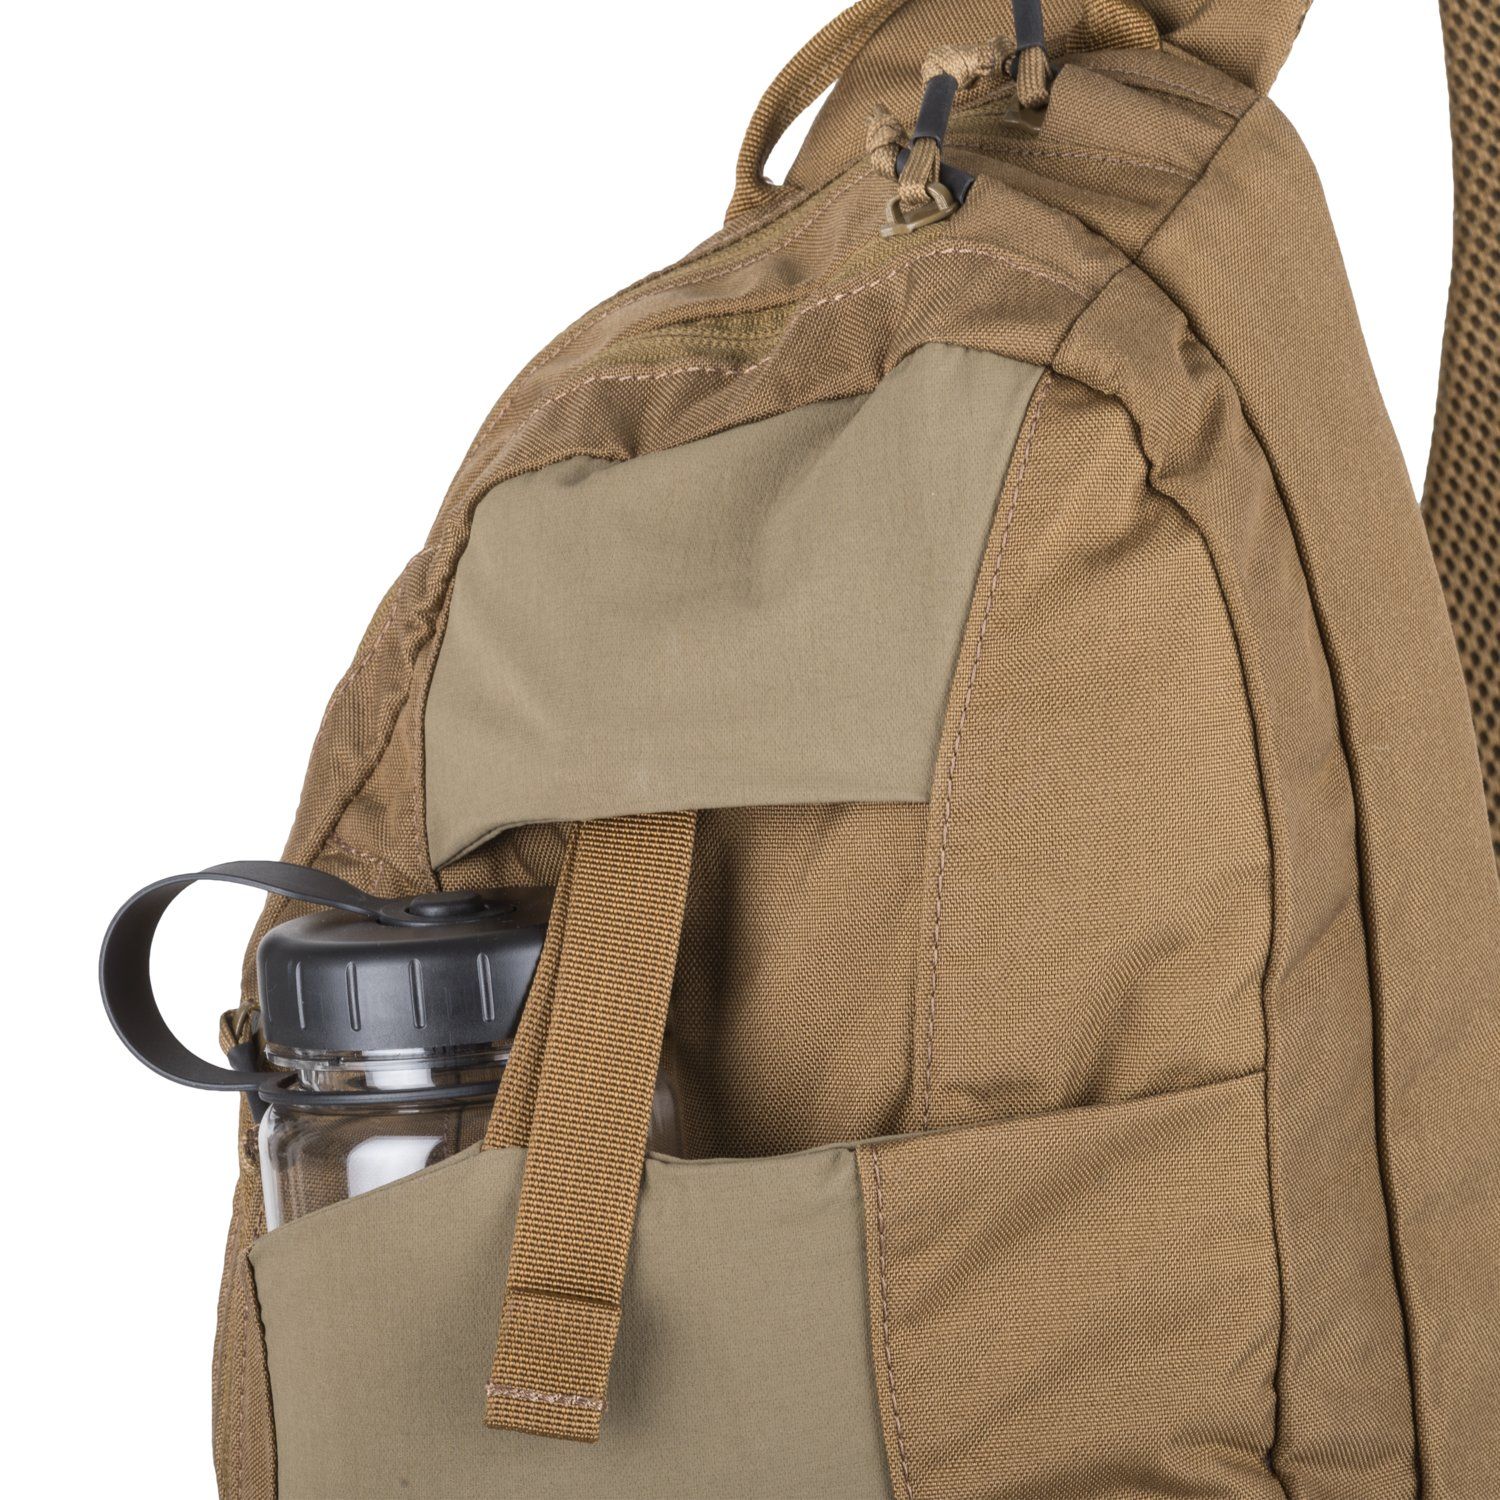 EDC Sling Backpack - Cordura® - Shadow Grey